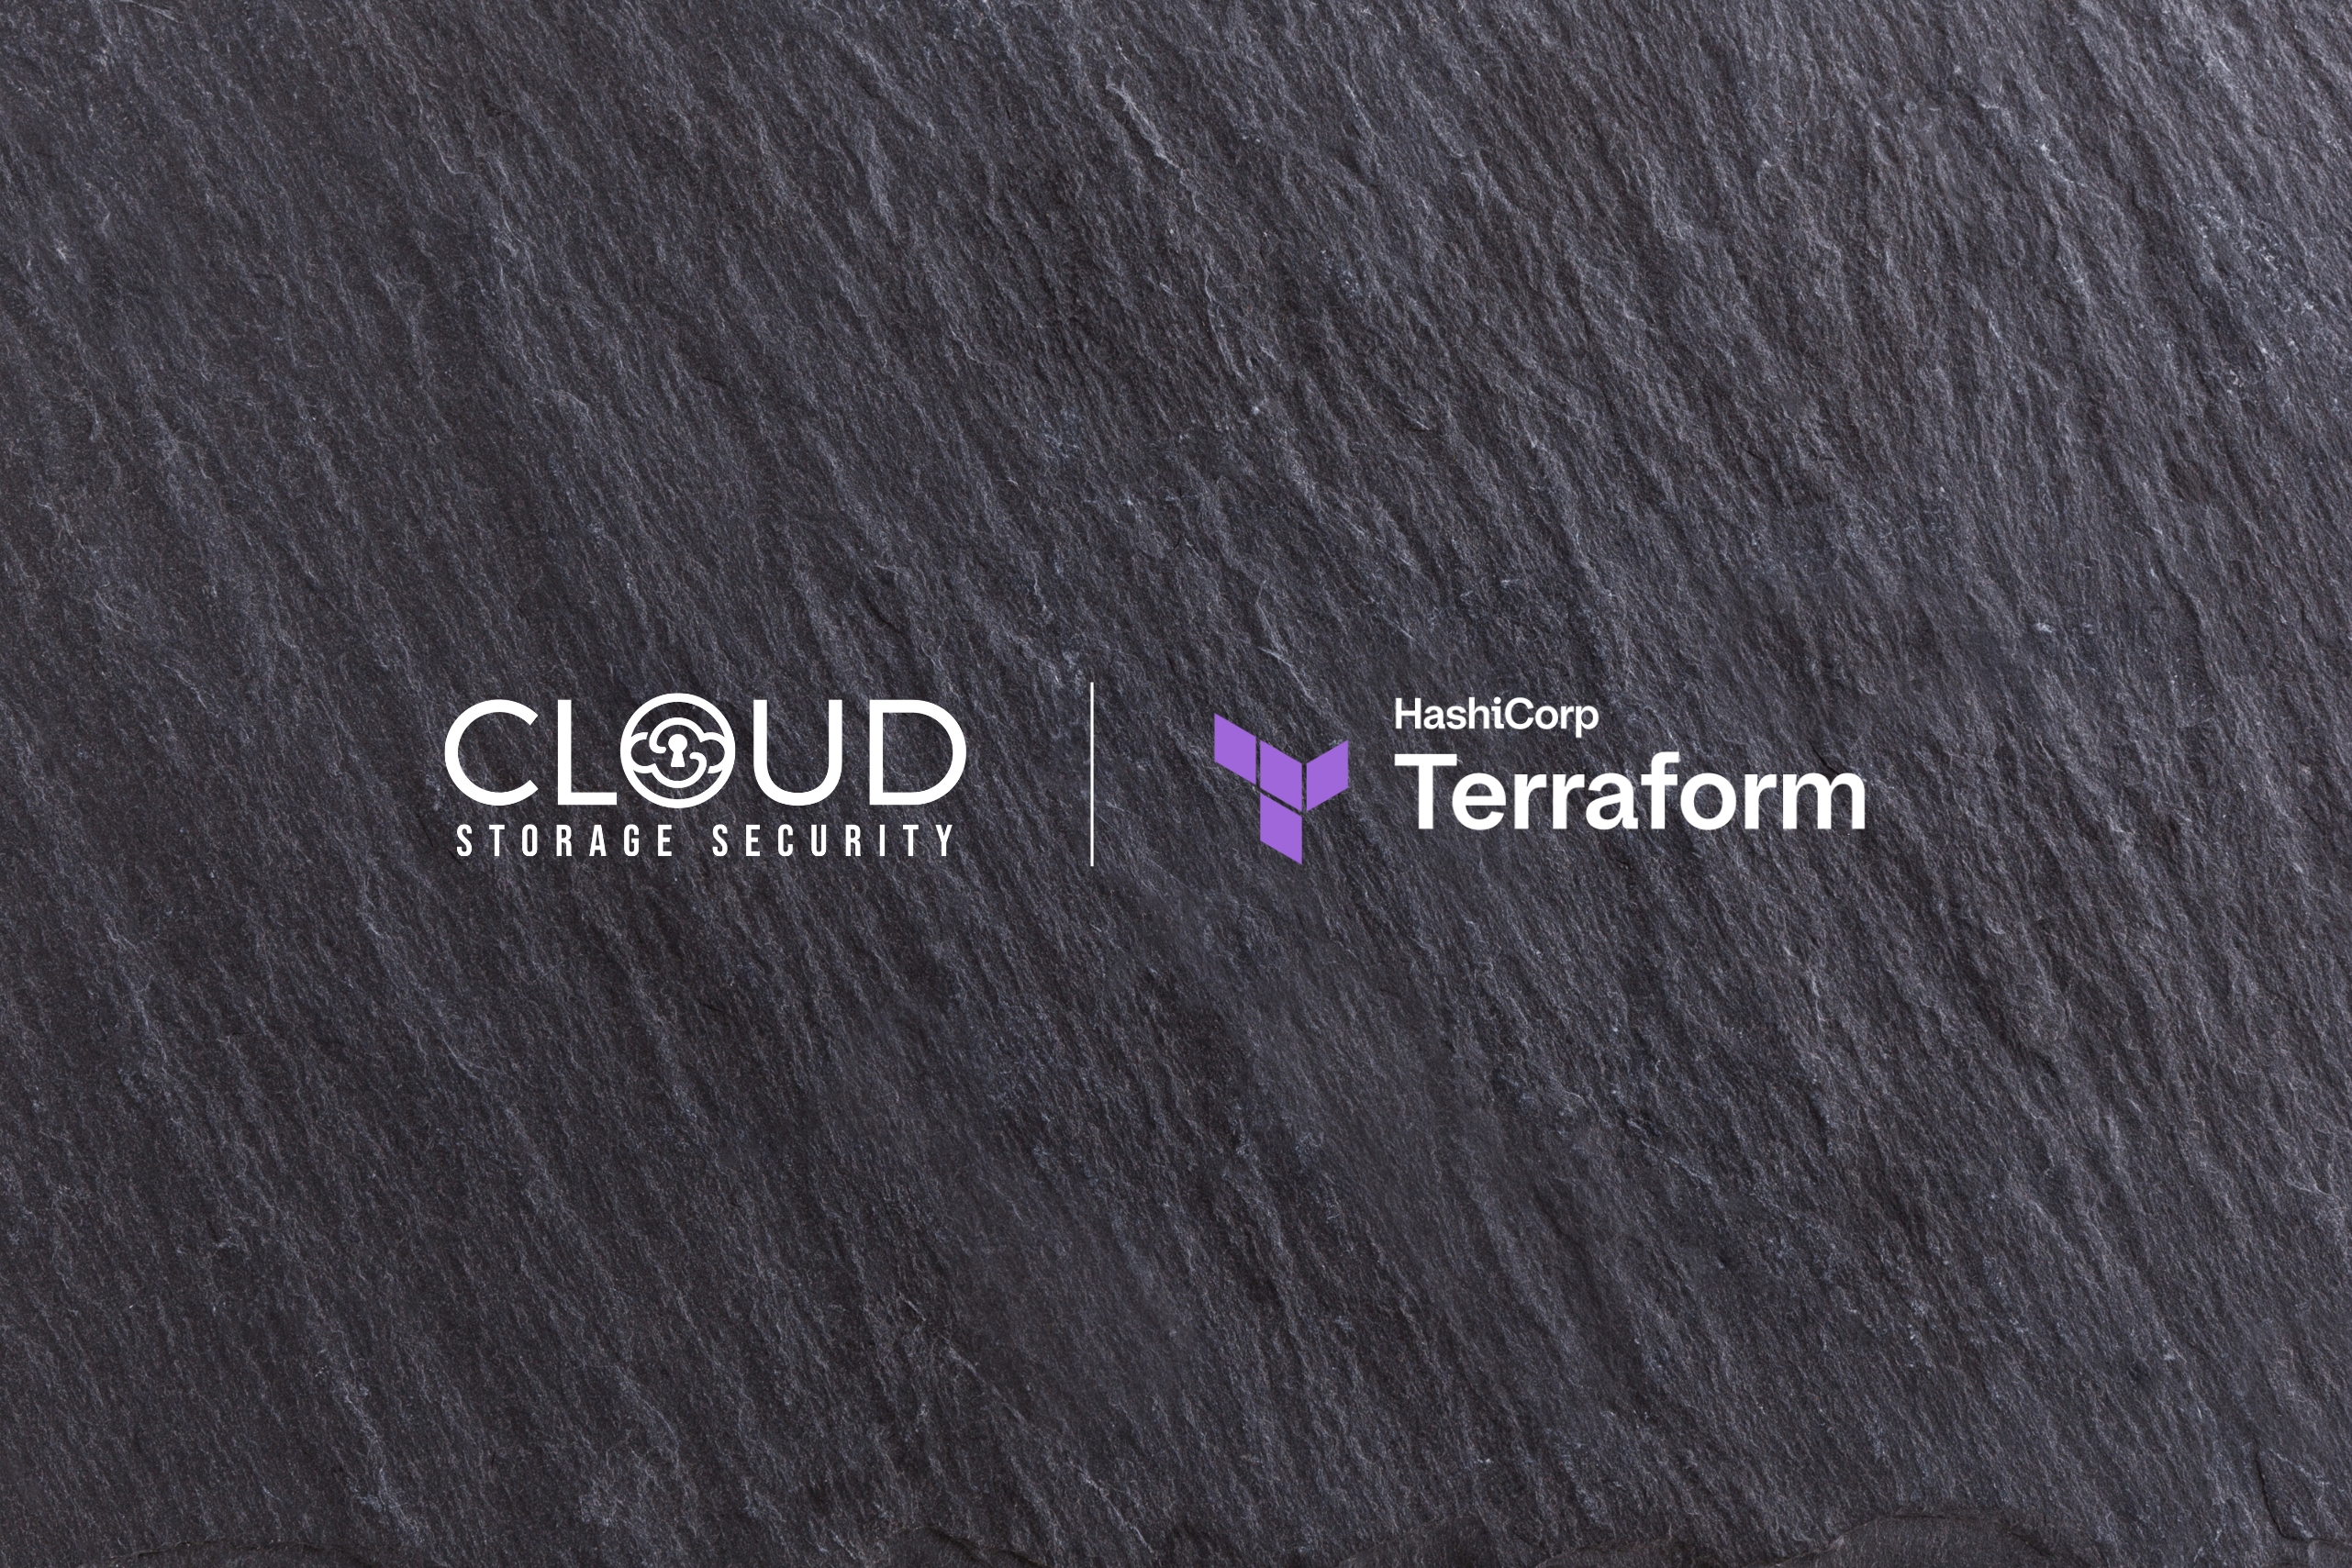 Cloud Storage Security and Terraform Logo